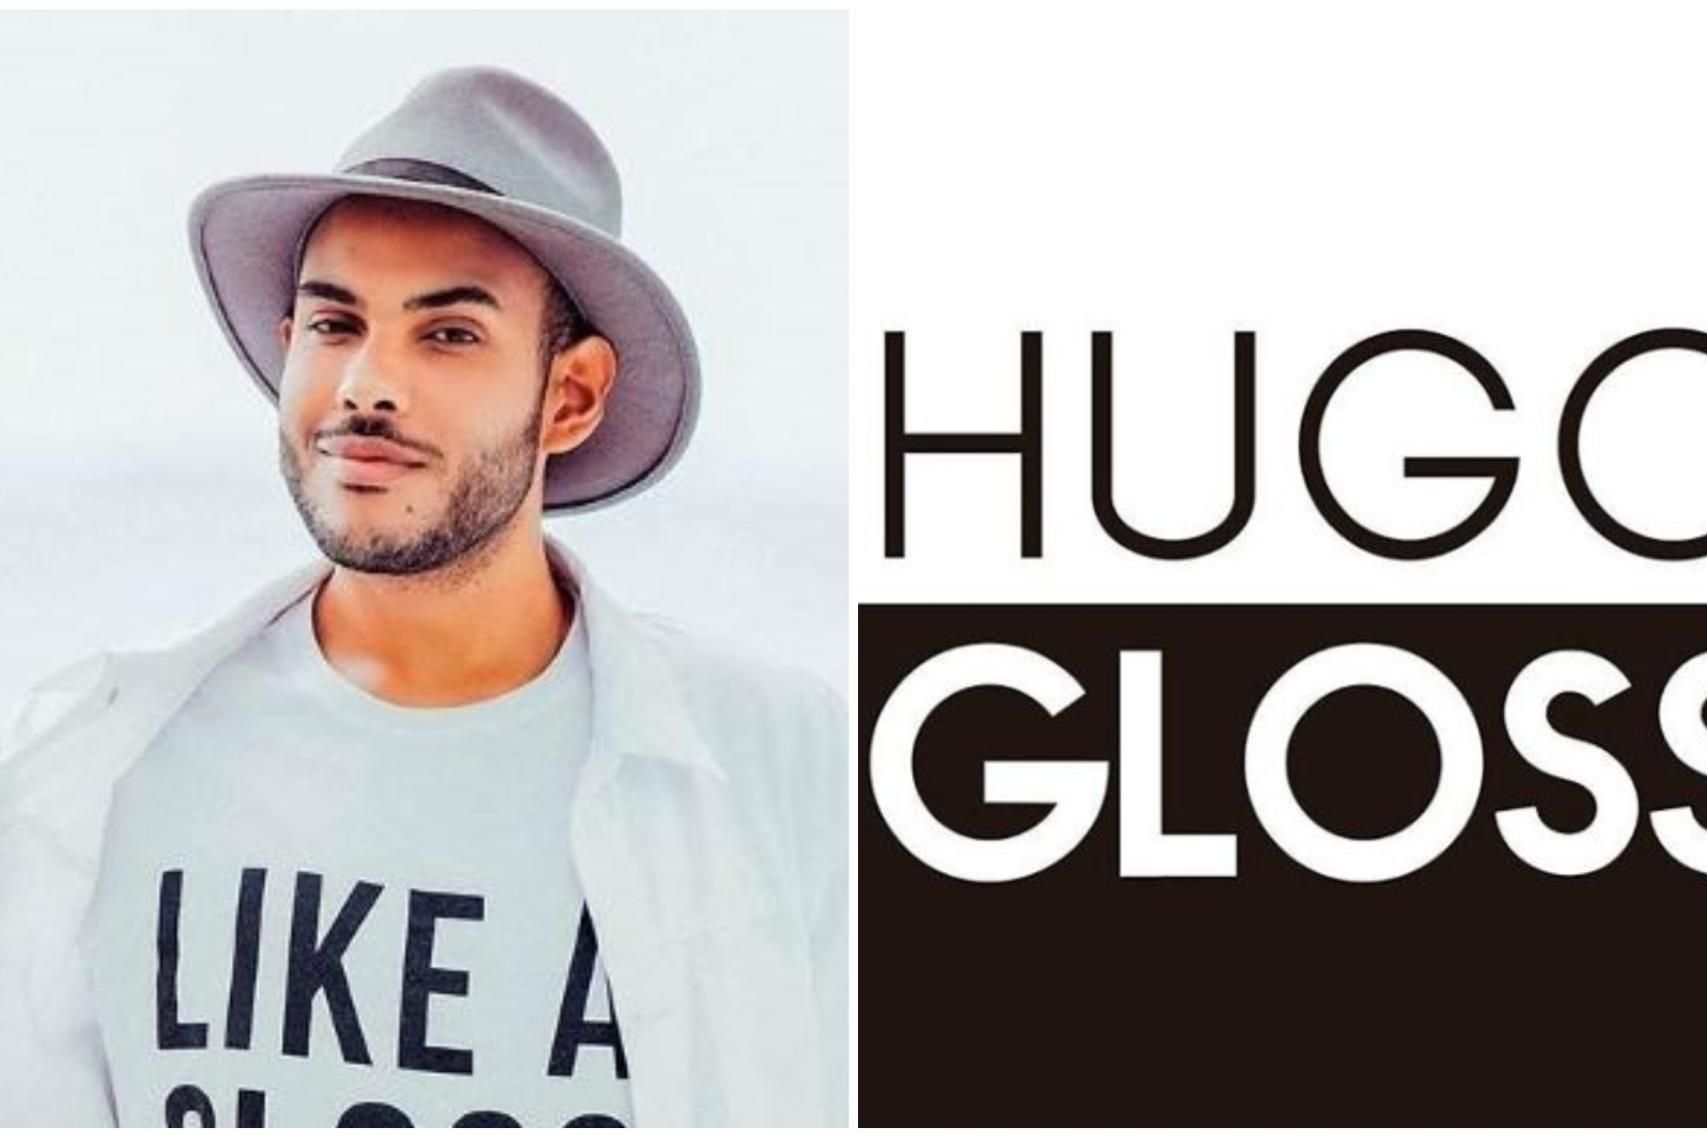 Home - Hugo Gloss